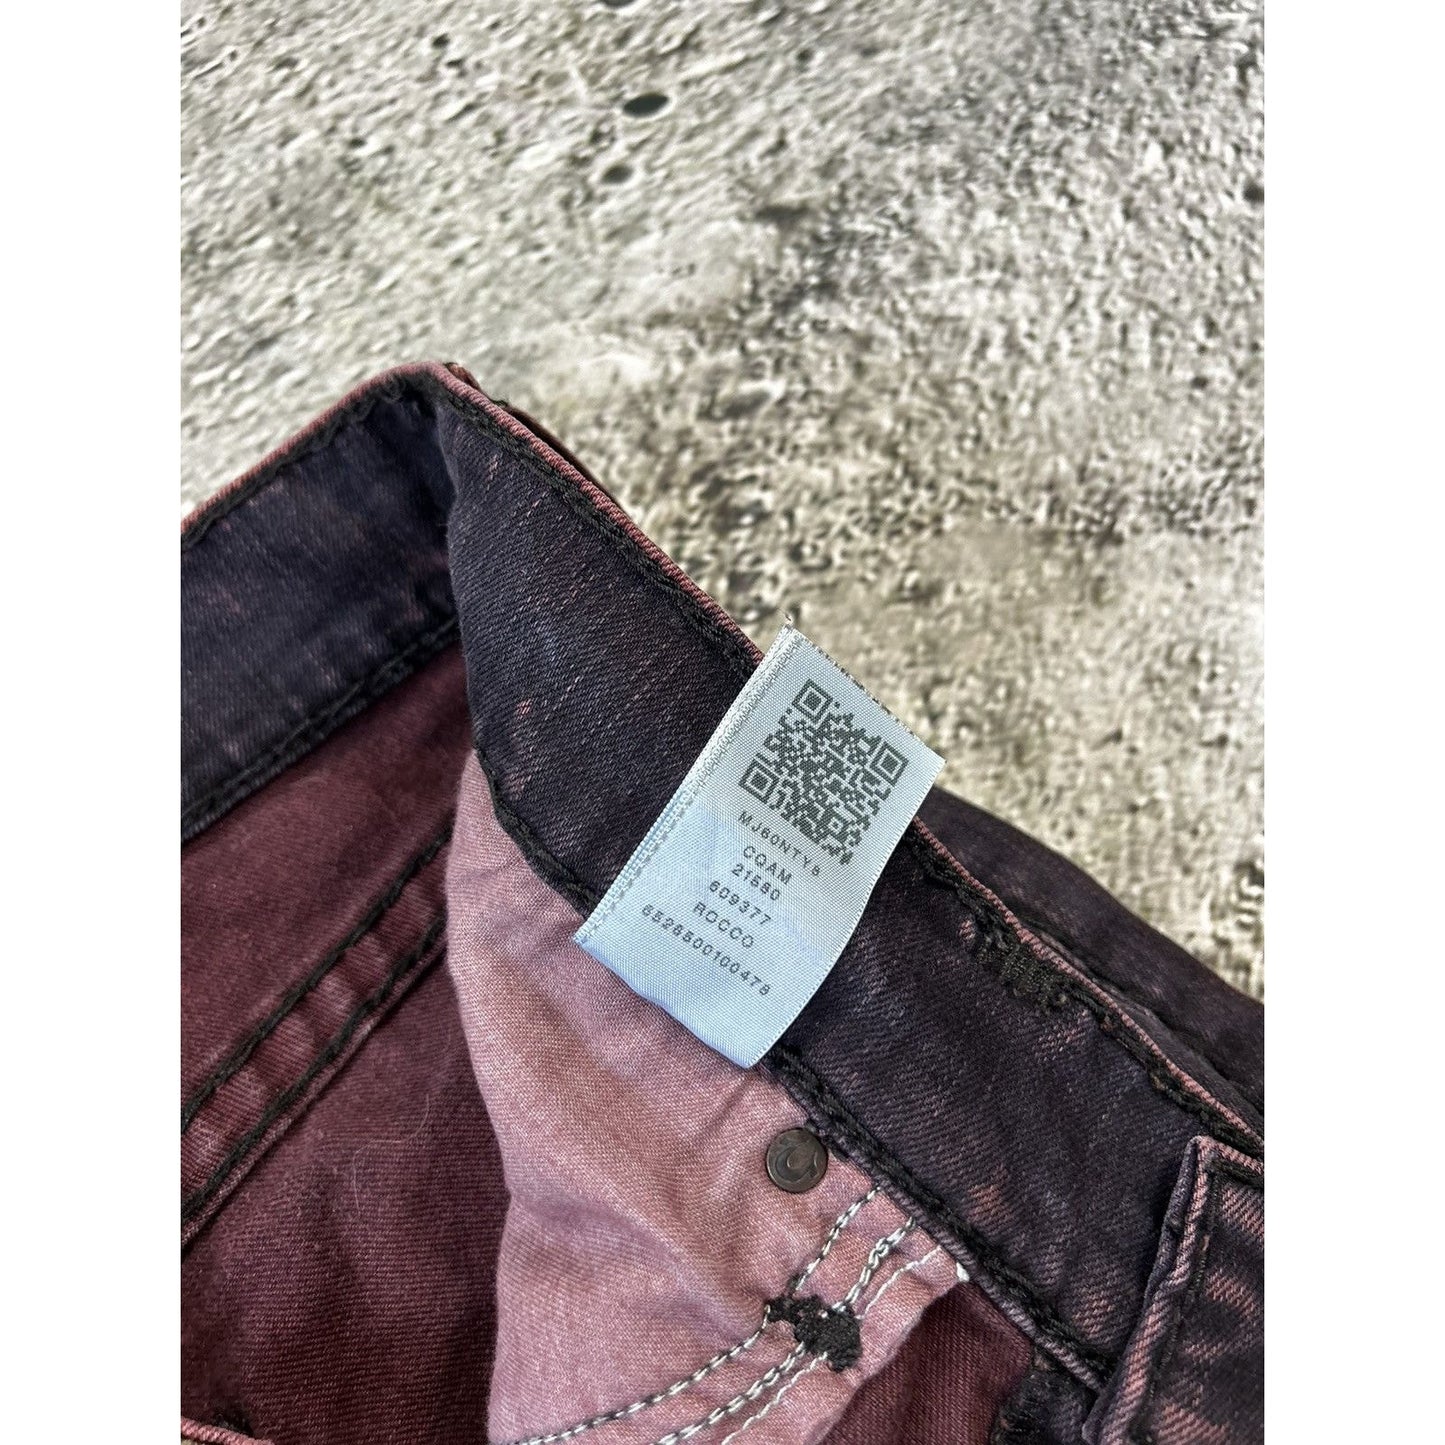 True Religion vintage jeans burgundy red thick stitching Y2K